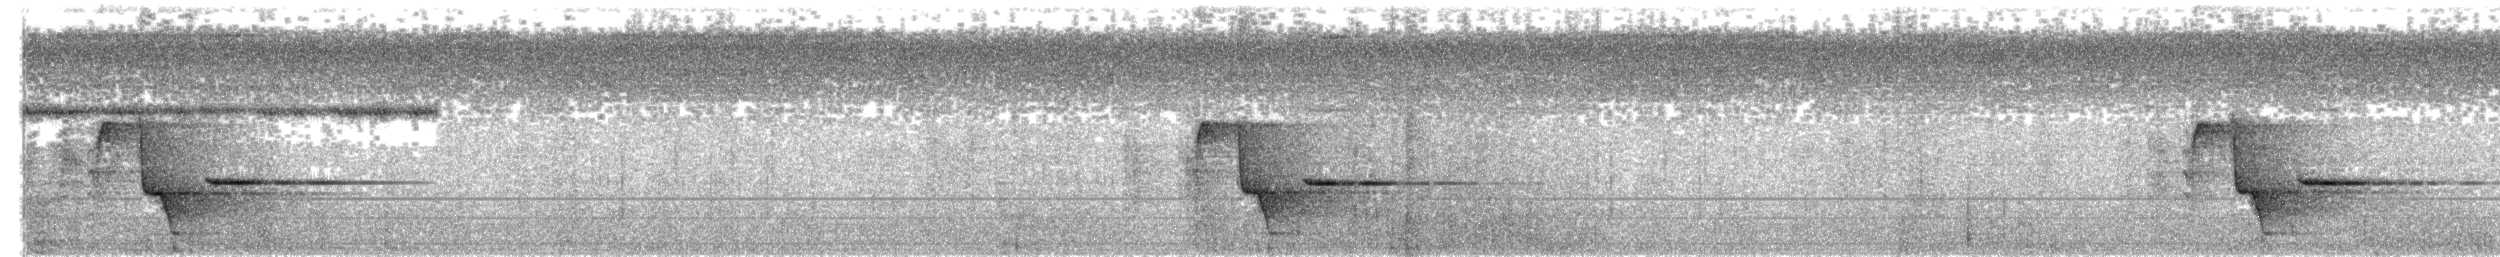 Ak Karınlı Kara Katmerkuyruk - ML203490081